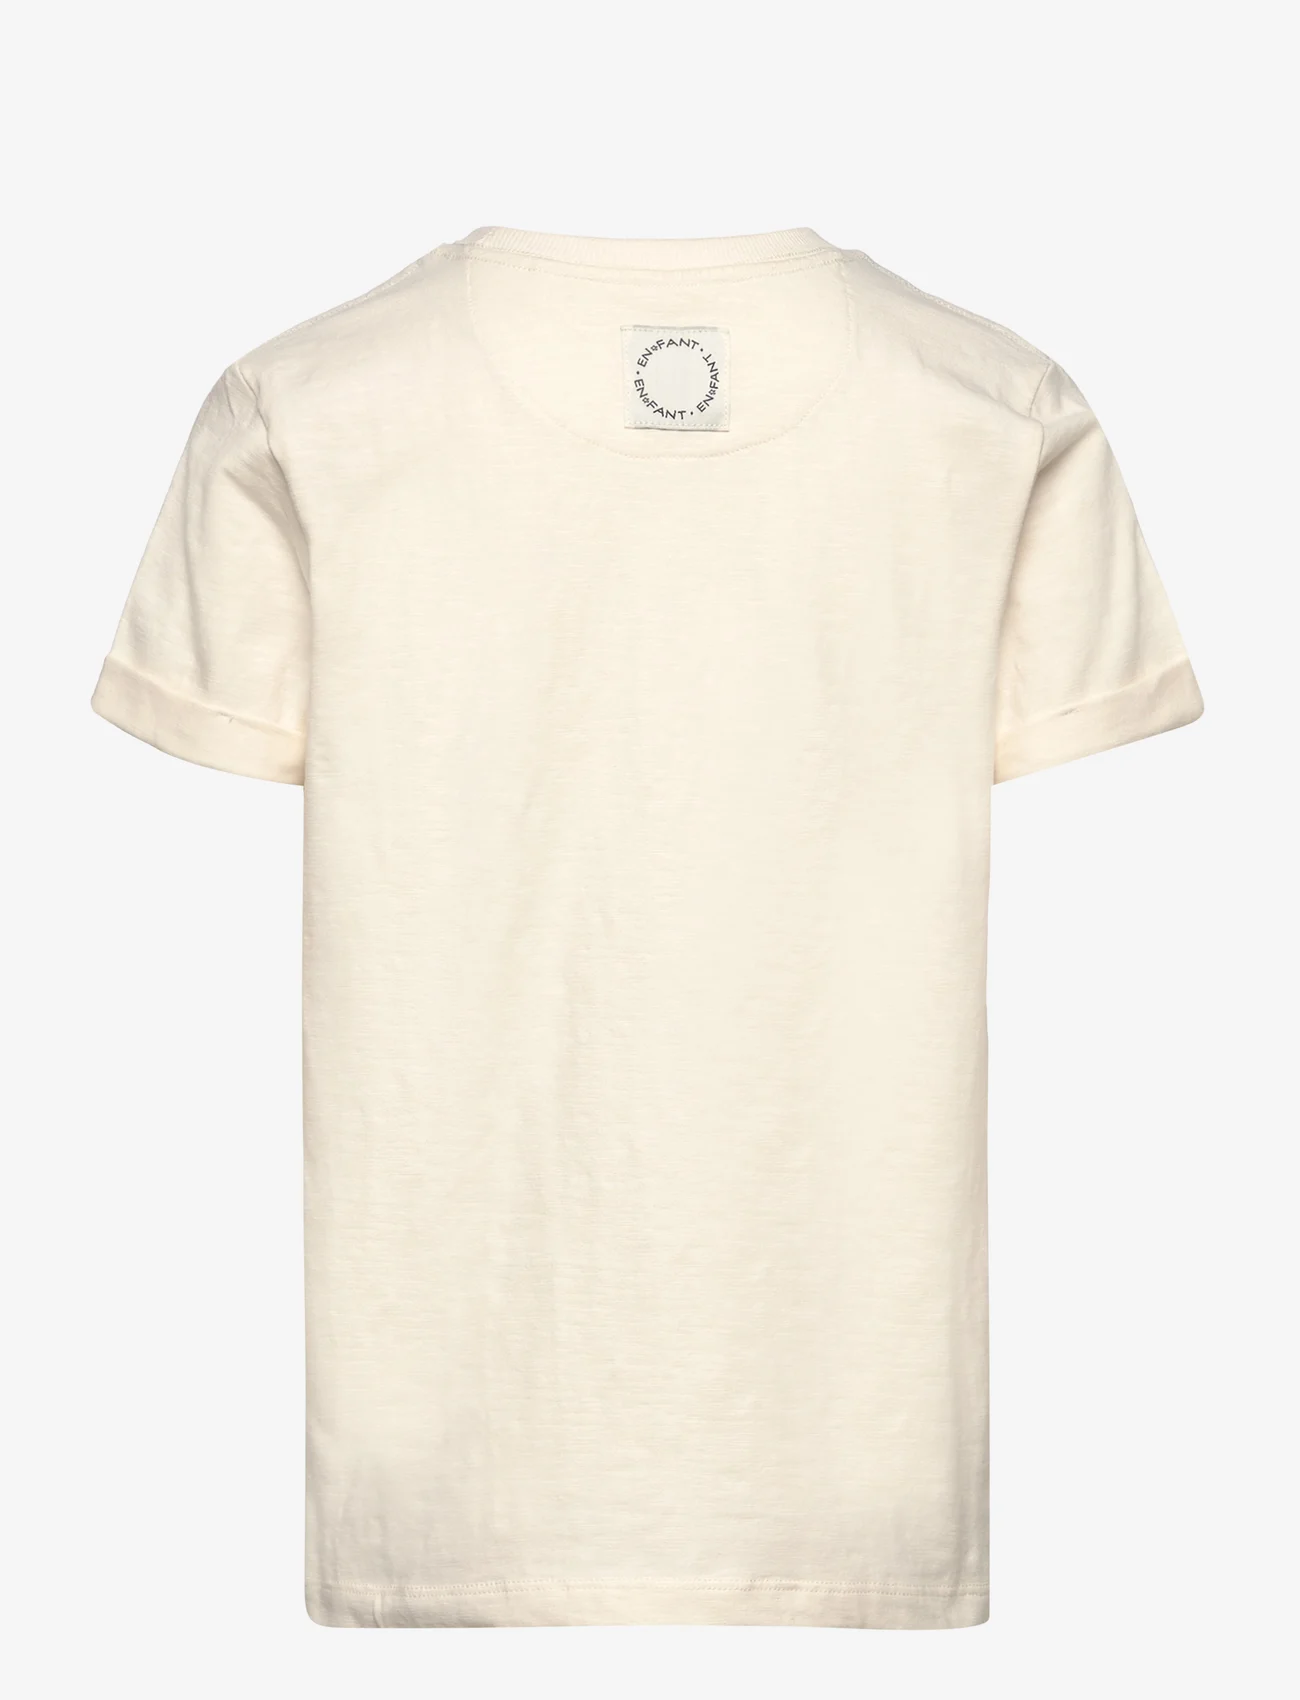 En Fant - T-shirt SS Slub - short-sleeved - eggnog - 1